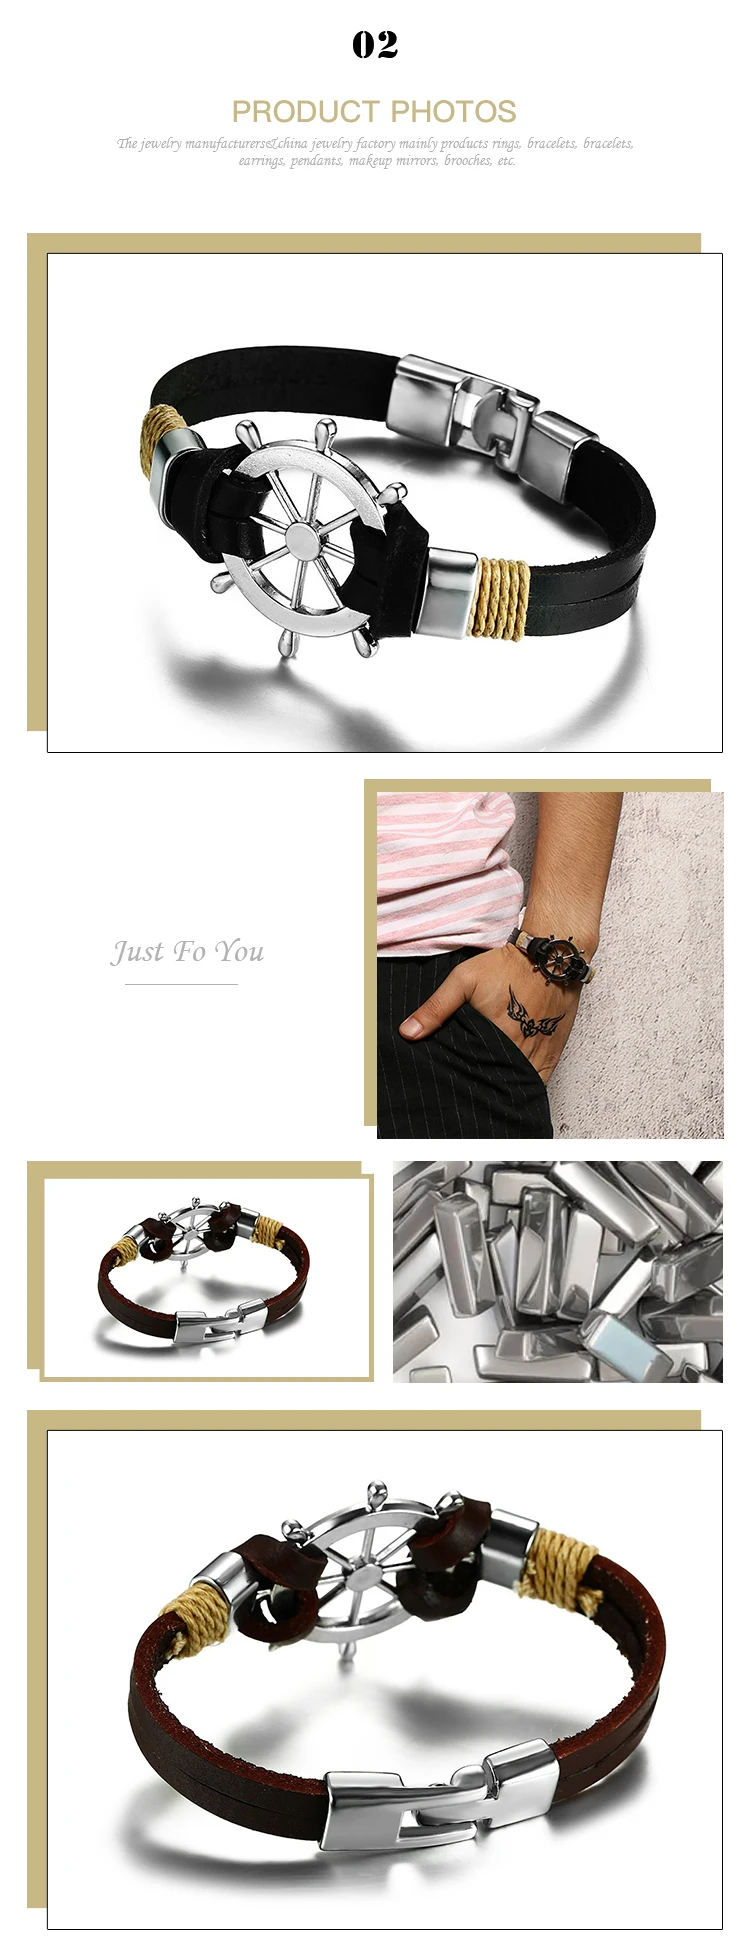 Cross-border e-commerce jewelry alloy ship helmsman rope black brown men's trendy bracelet wholesale BL289